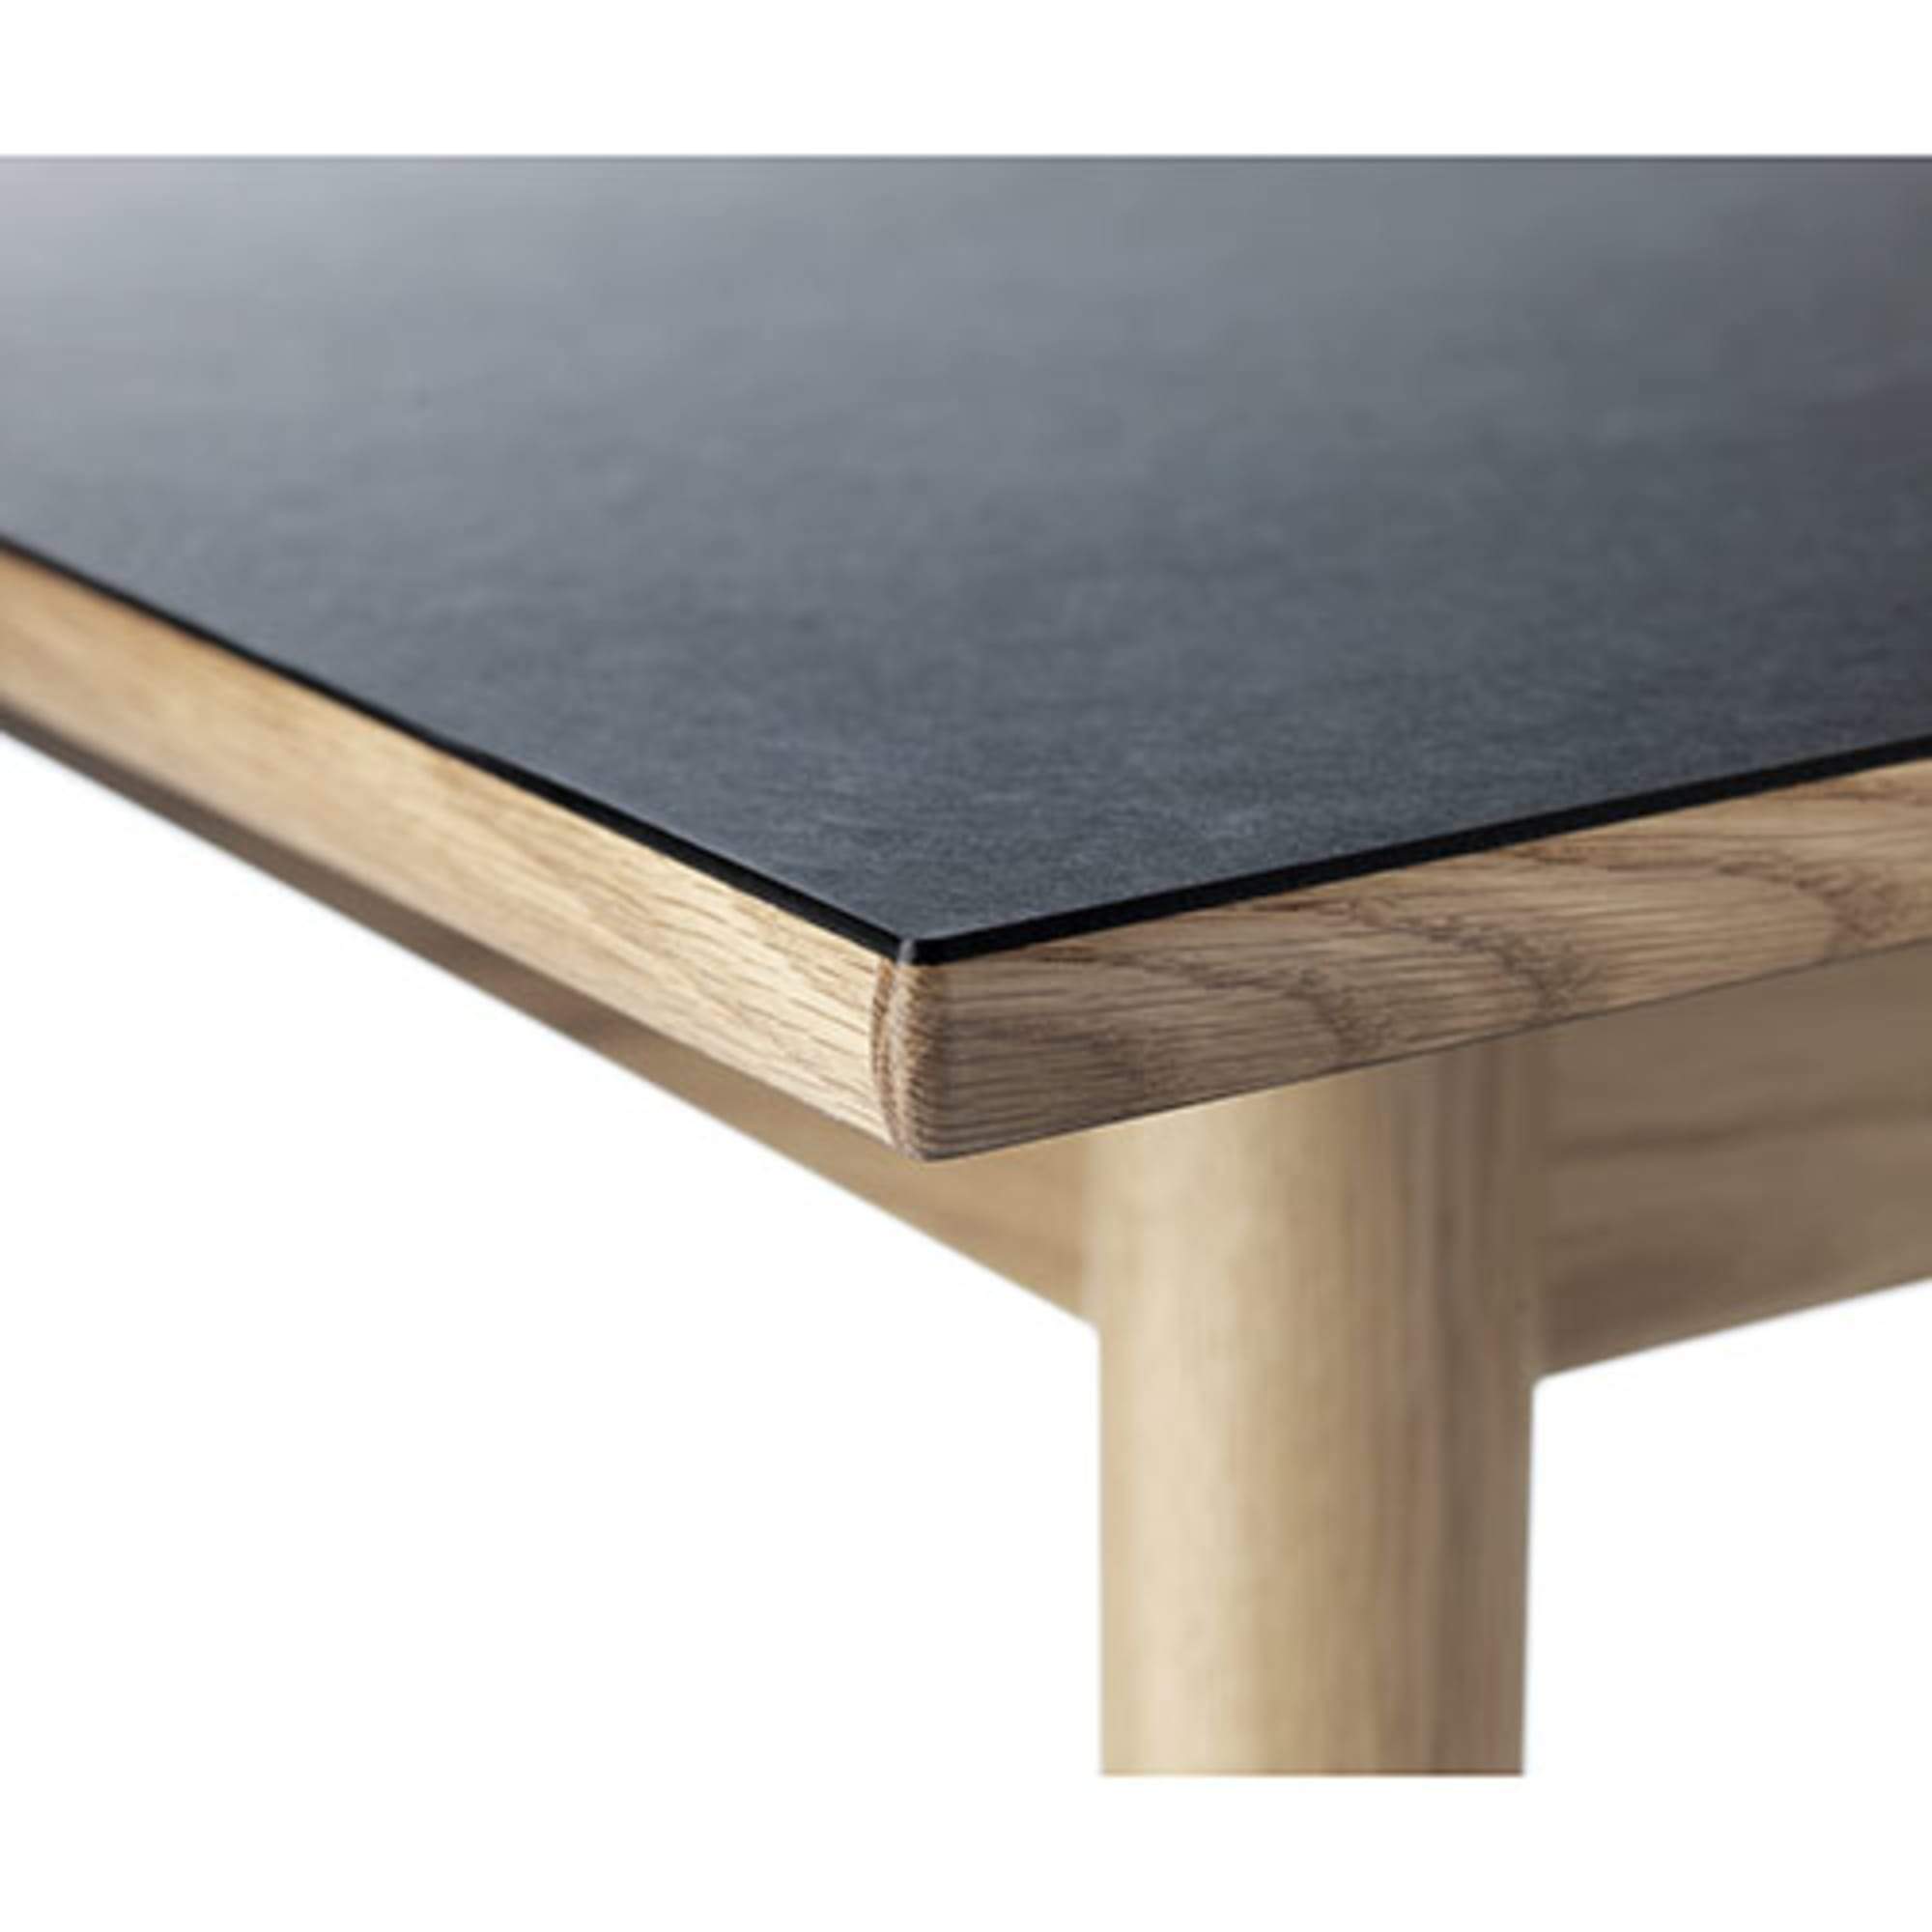 Fdb Møbler C35 Dining Table Oak, Black Linoleum Tabletop, 82x82cm